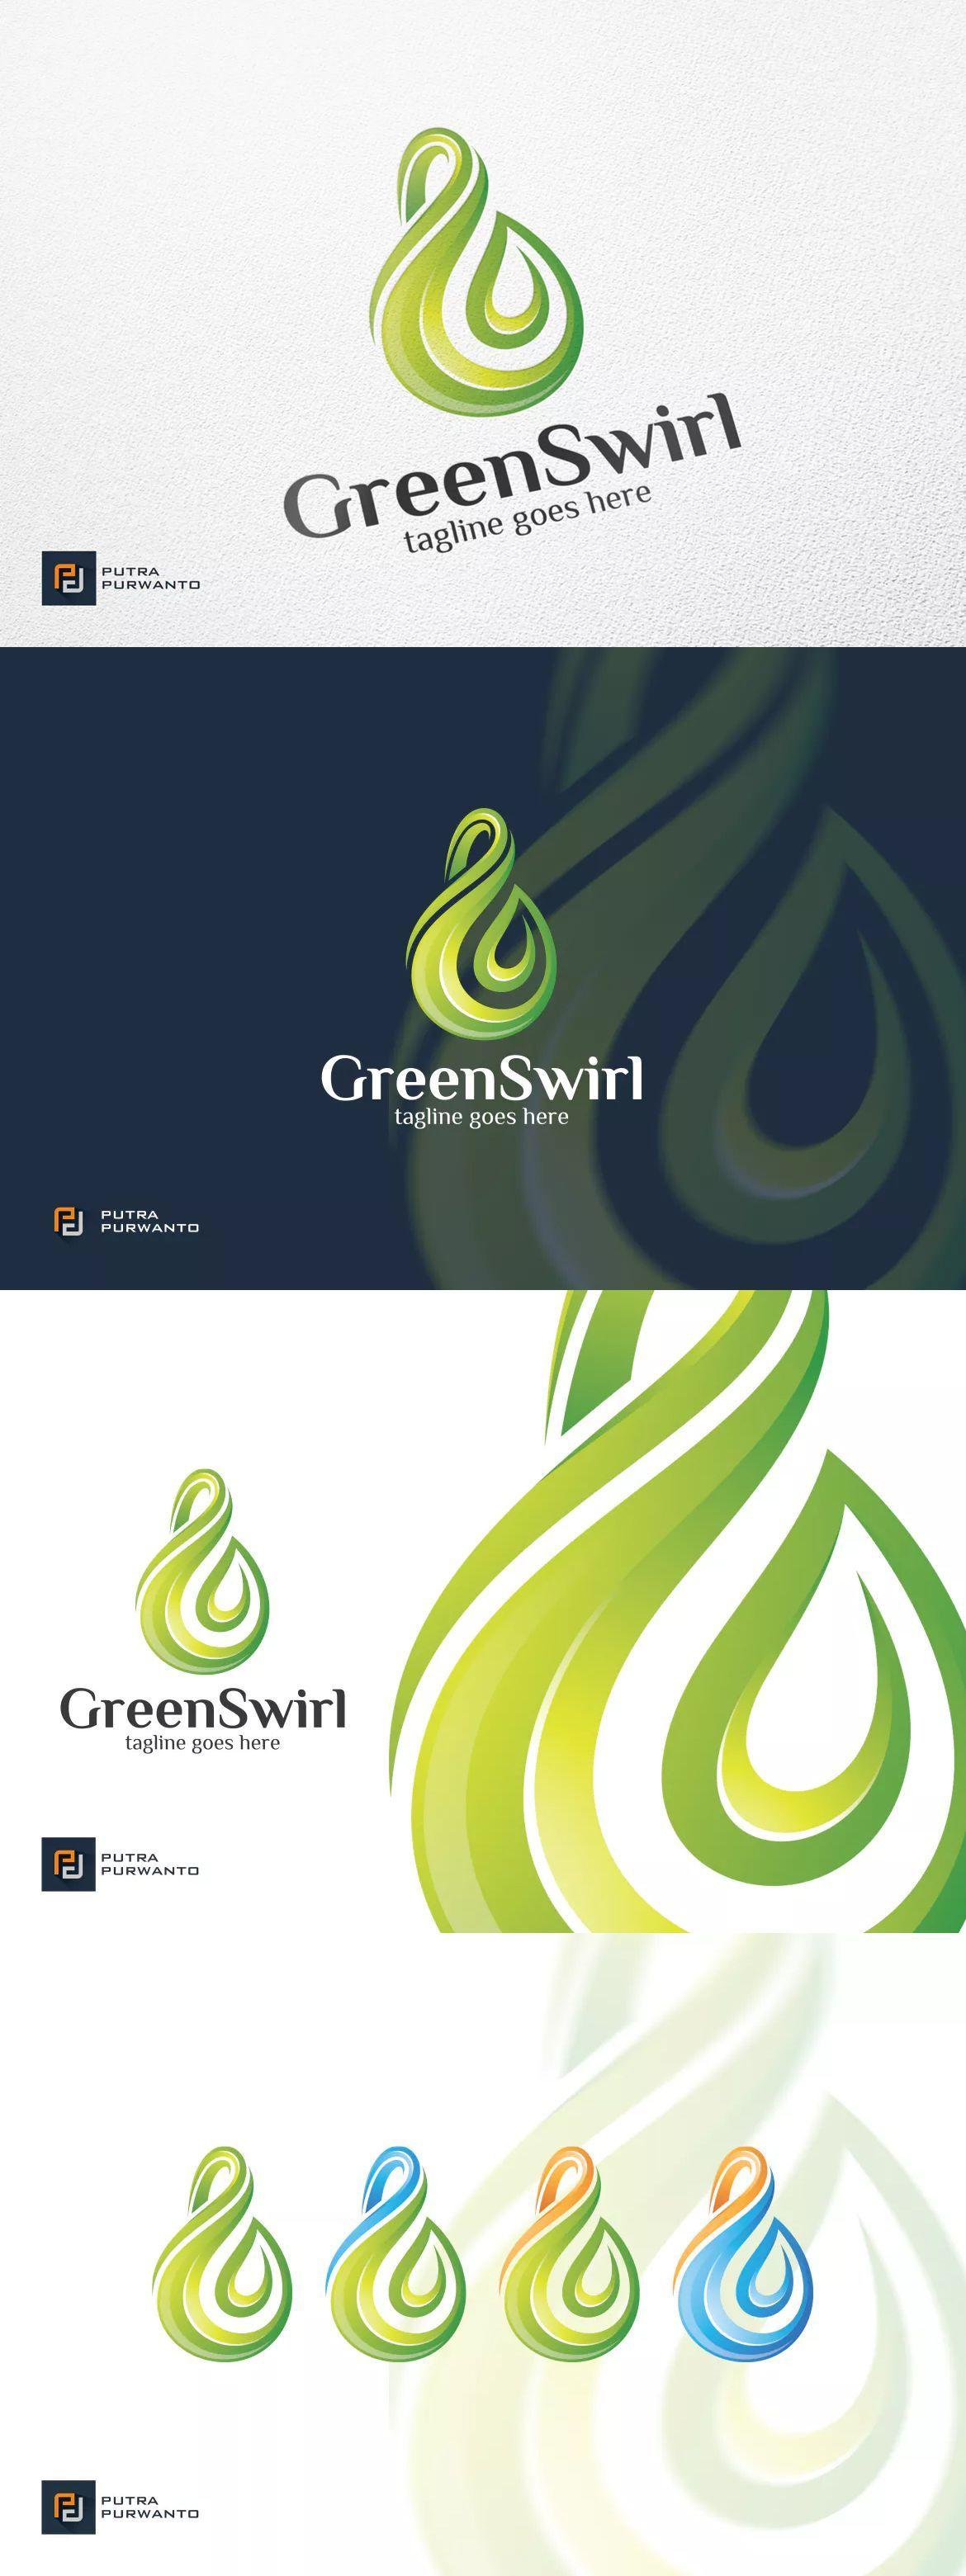 Green Swirl Logo - Green Swirl Template AI, EPS. Logo Templates